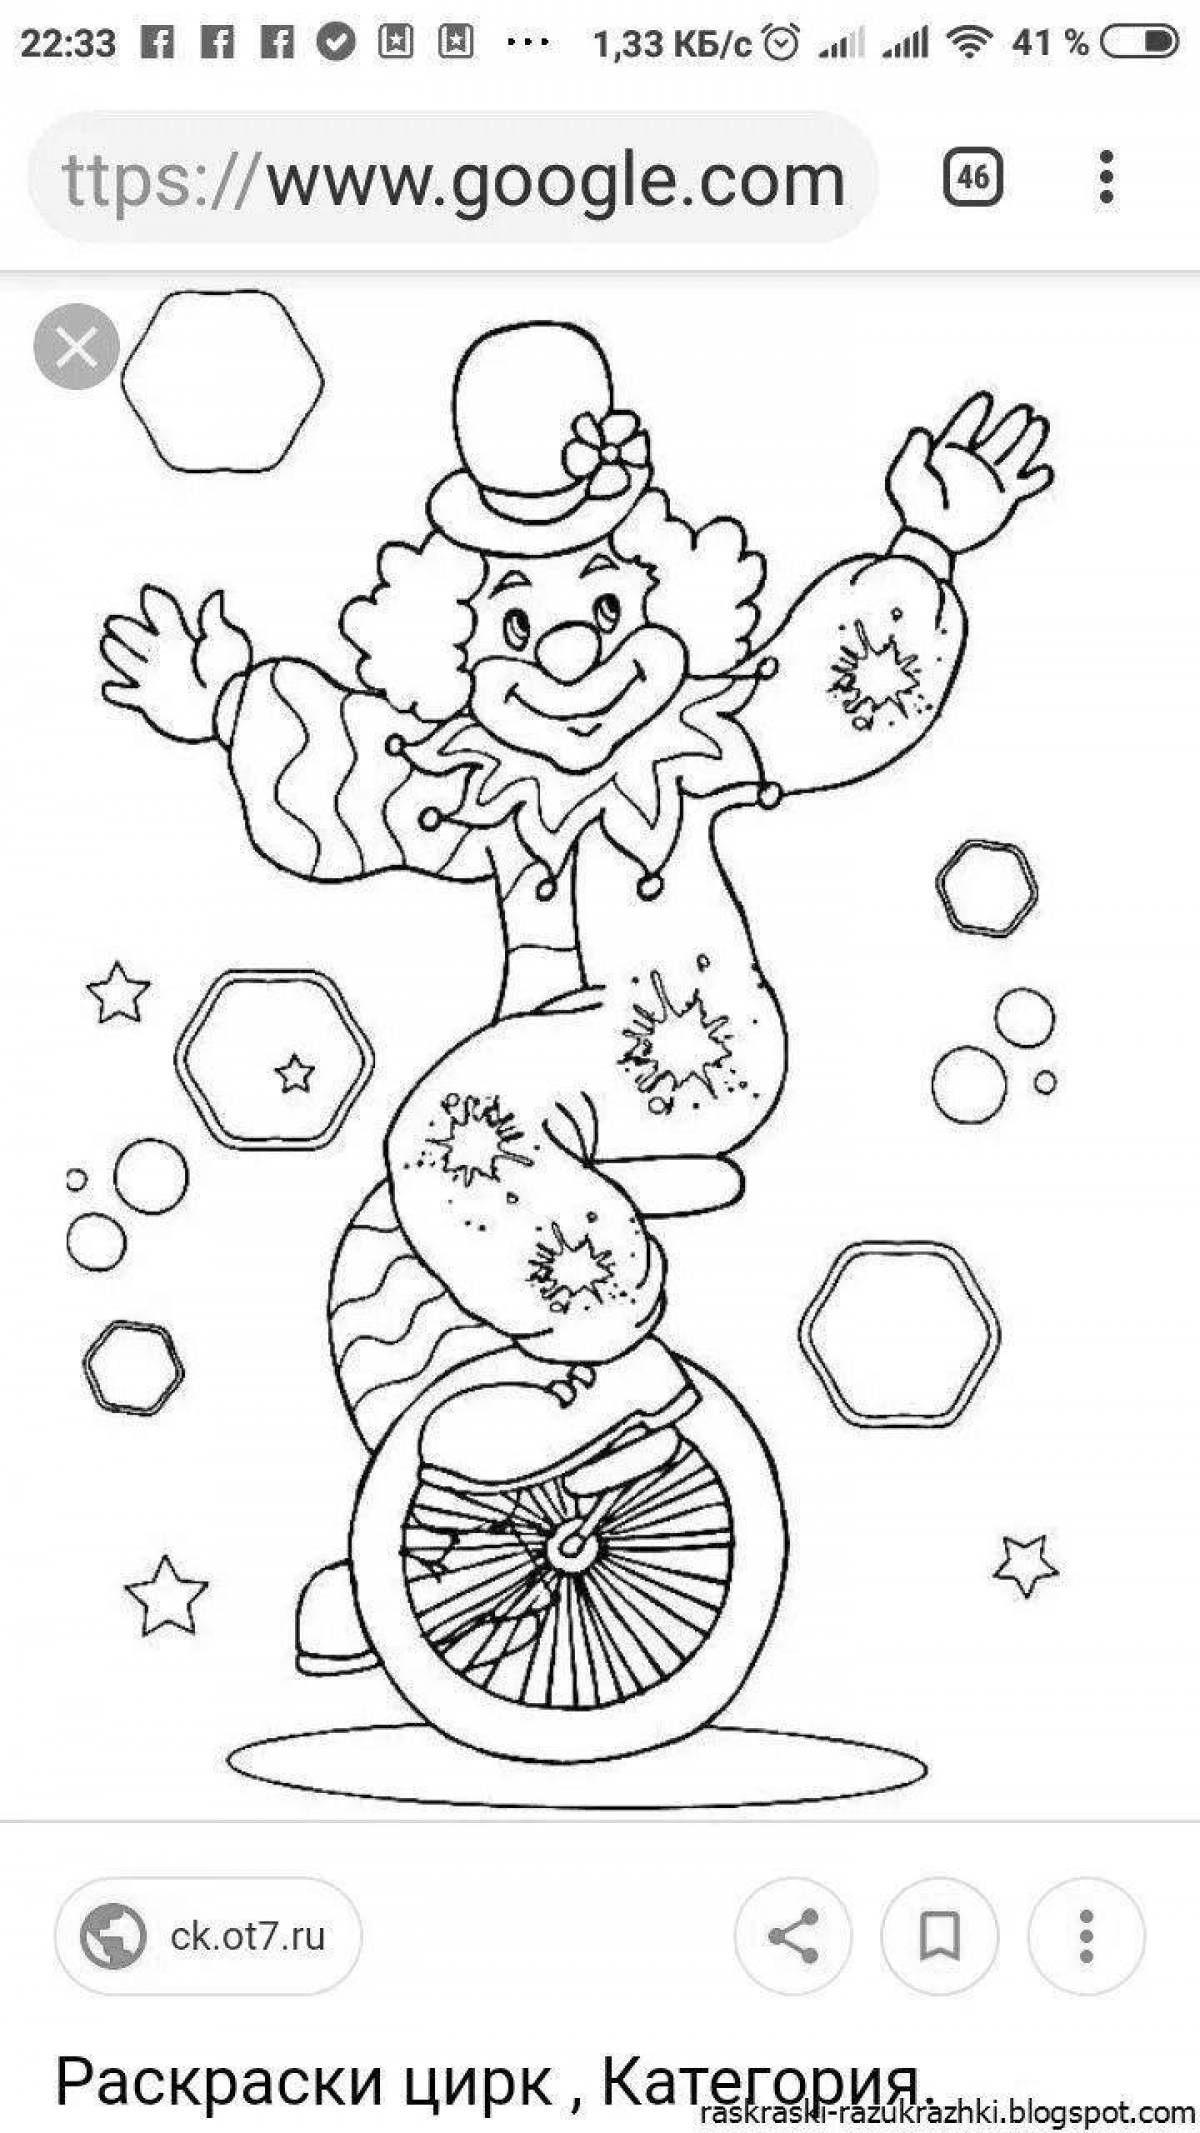 Adorable clown coloring book for preschoolers